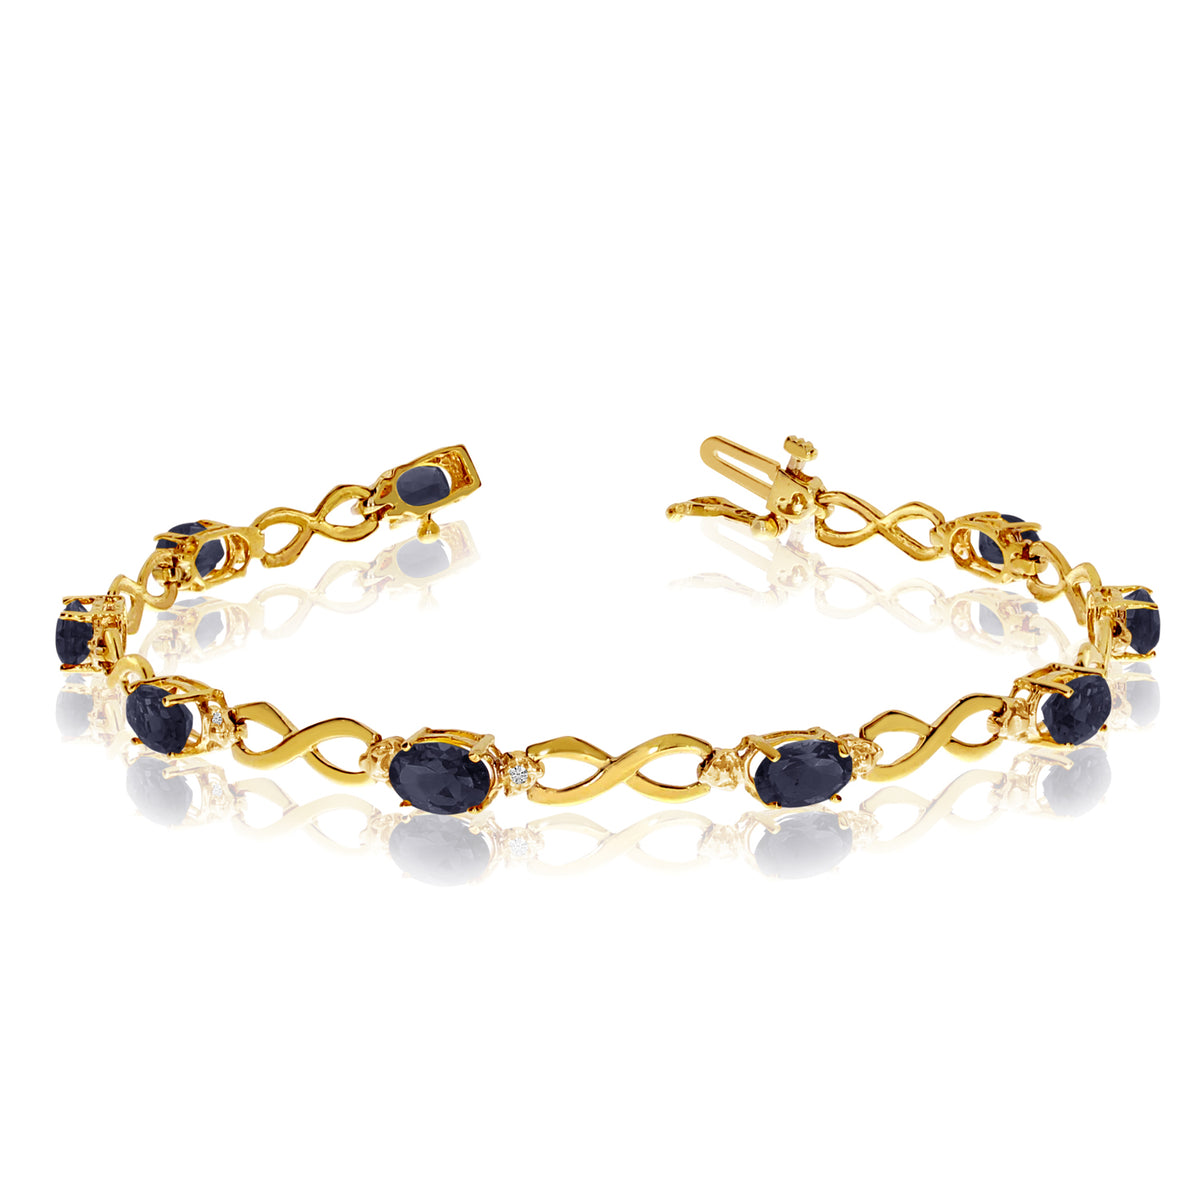 14K Yellow Gold Oval Sapphire Stones And Diamonds Infinity Tennis Bracelet, 7" fine designer jewelry for men and women